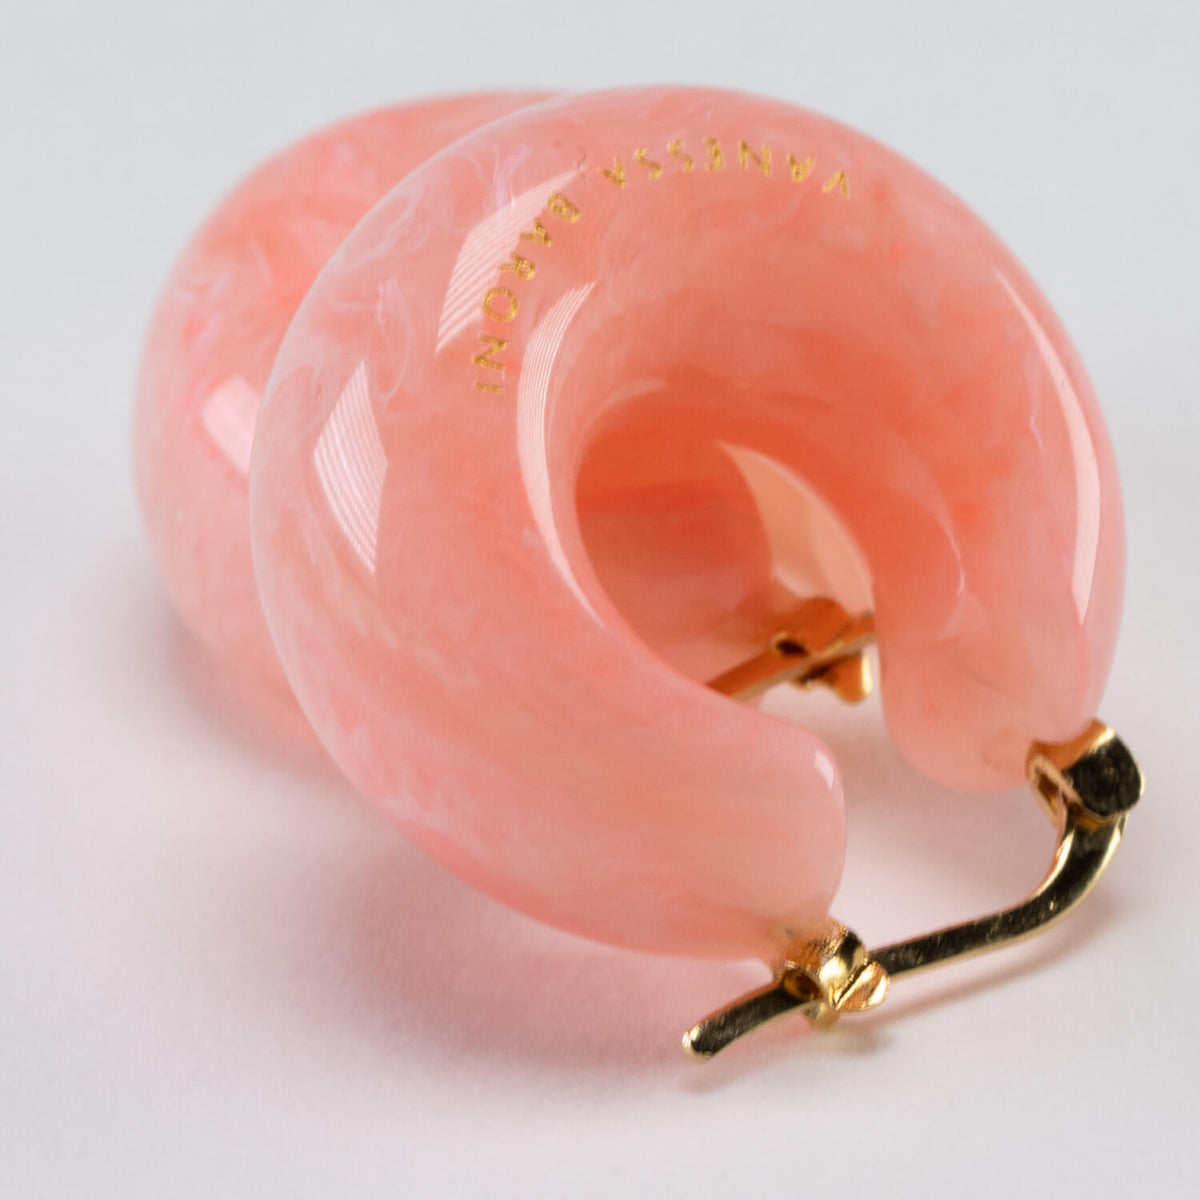 Circlet Earring Neon Pink Marble